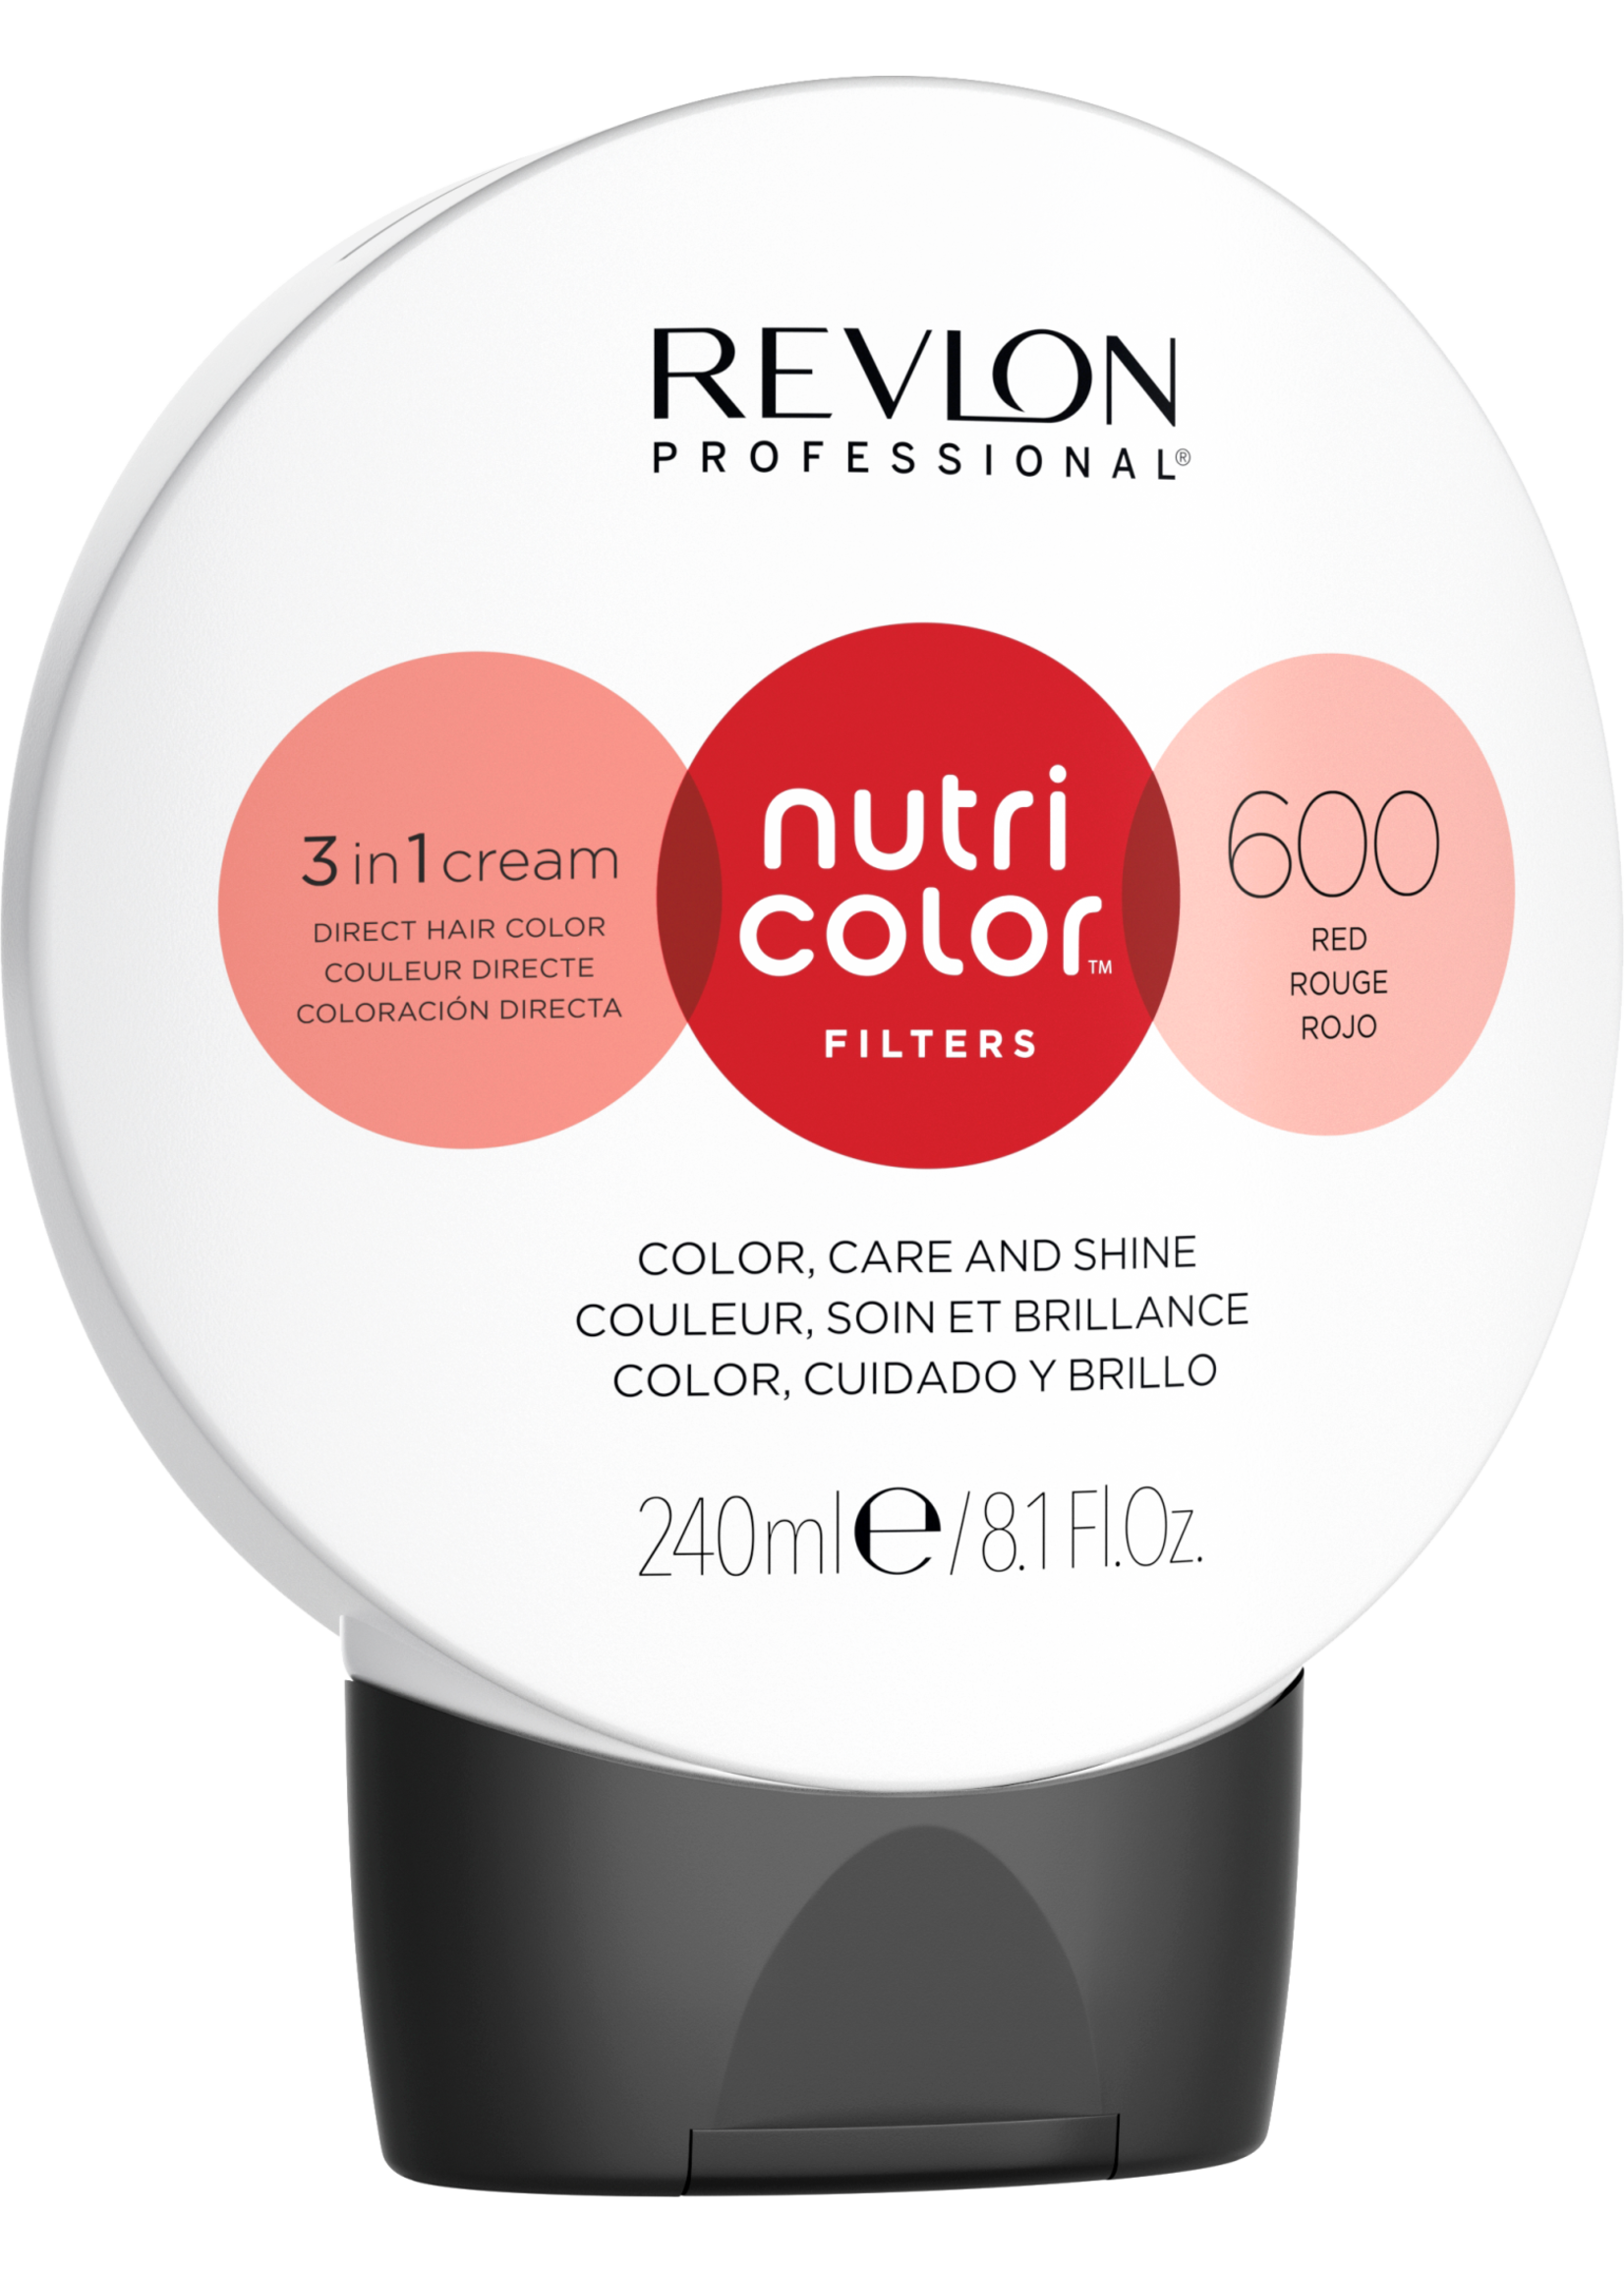 Revlon Professional Revlon Professional Nutri Color Filters 600 Red 240ml